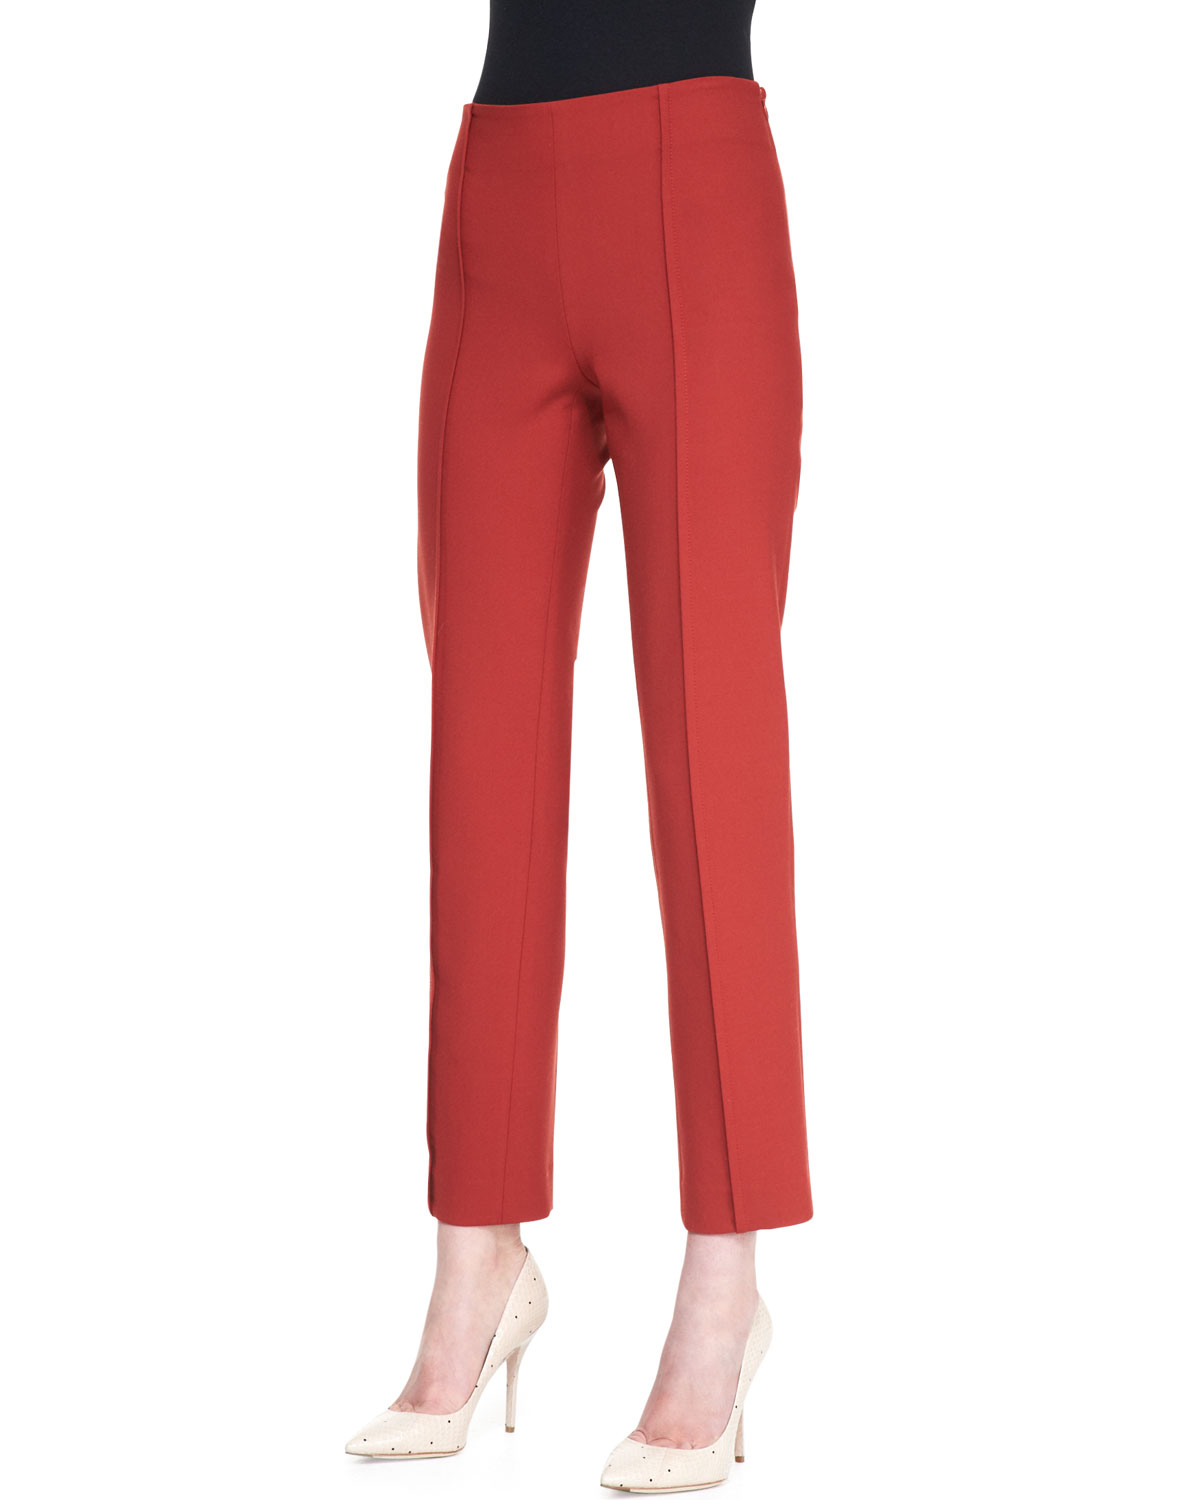 Lyst - Carolina Herrera Cropped Stretch Wool Straight-leg Pants in Red